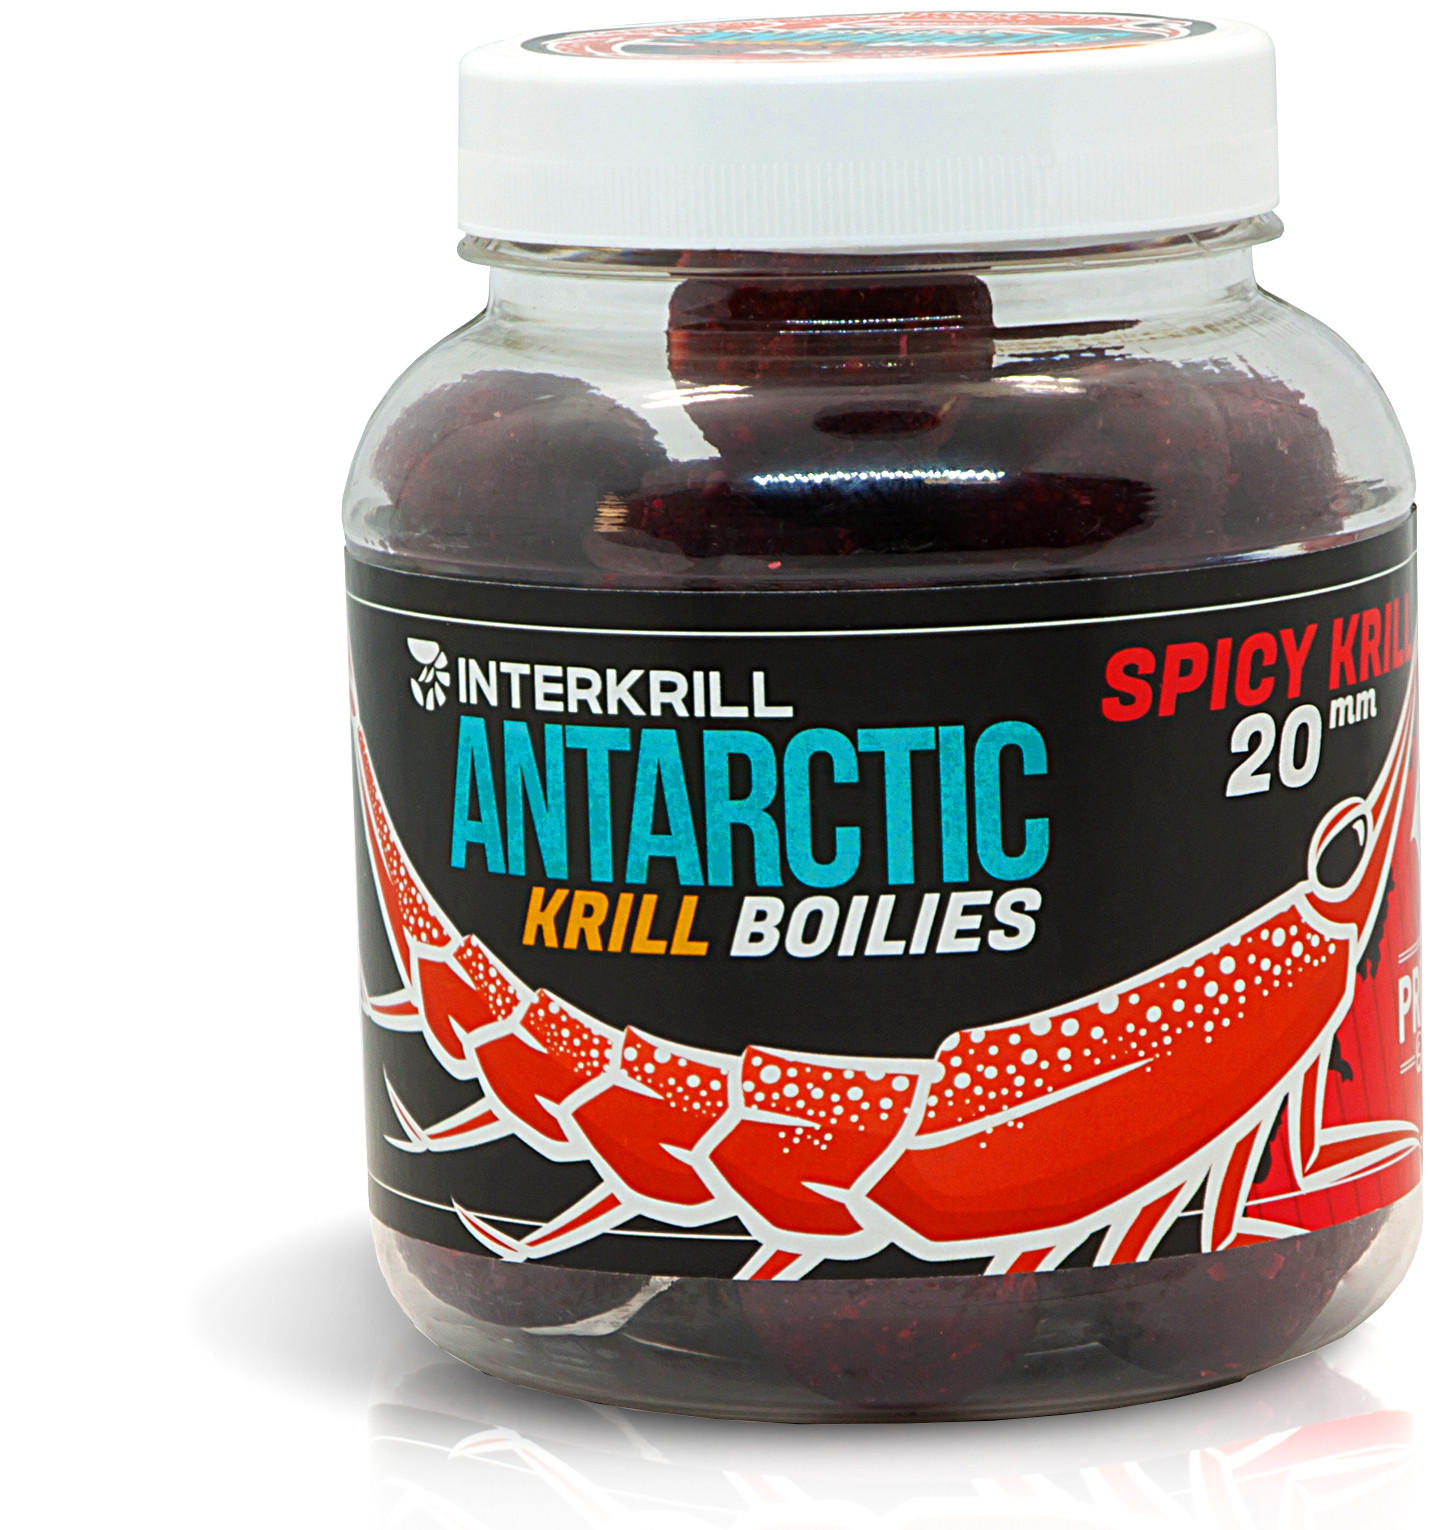 Бойл вареный насадочный “SPICY KRILL” 20мм / Antarctic Krill Boilies “SPICY KRILL” 20mm 250g